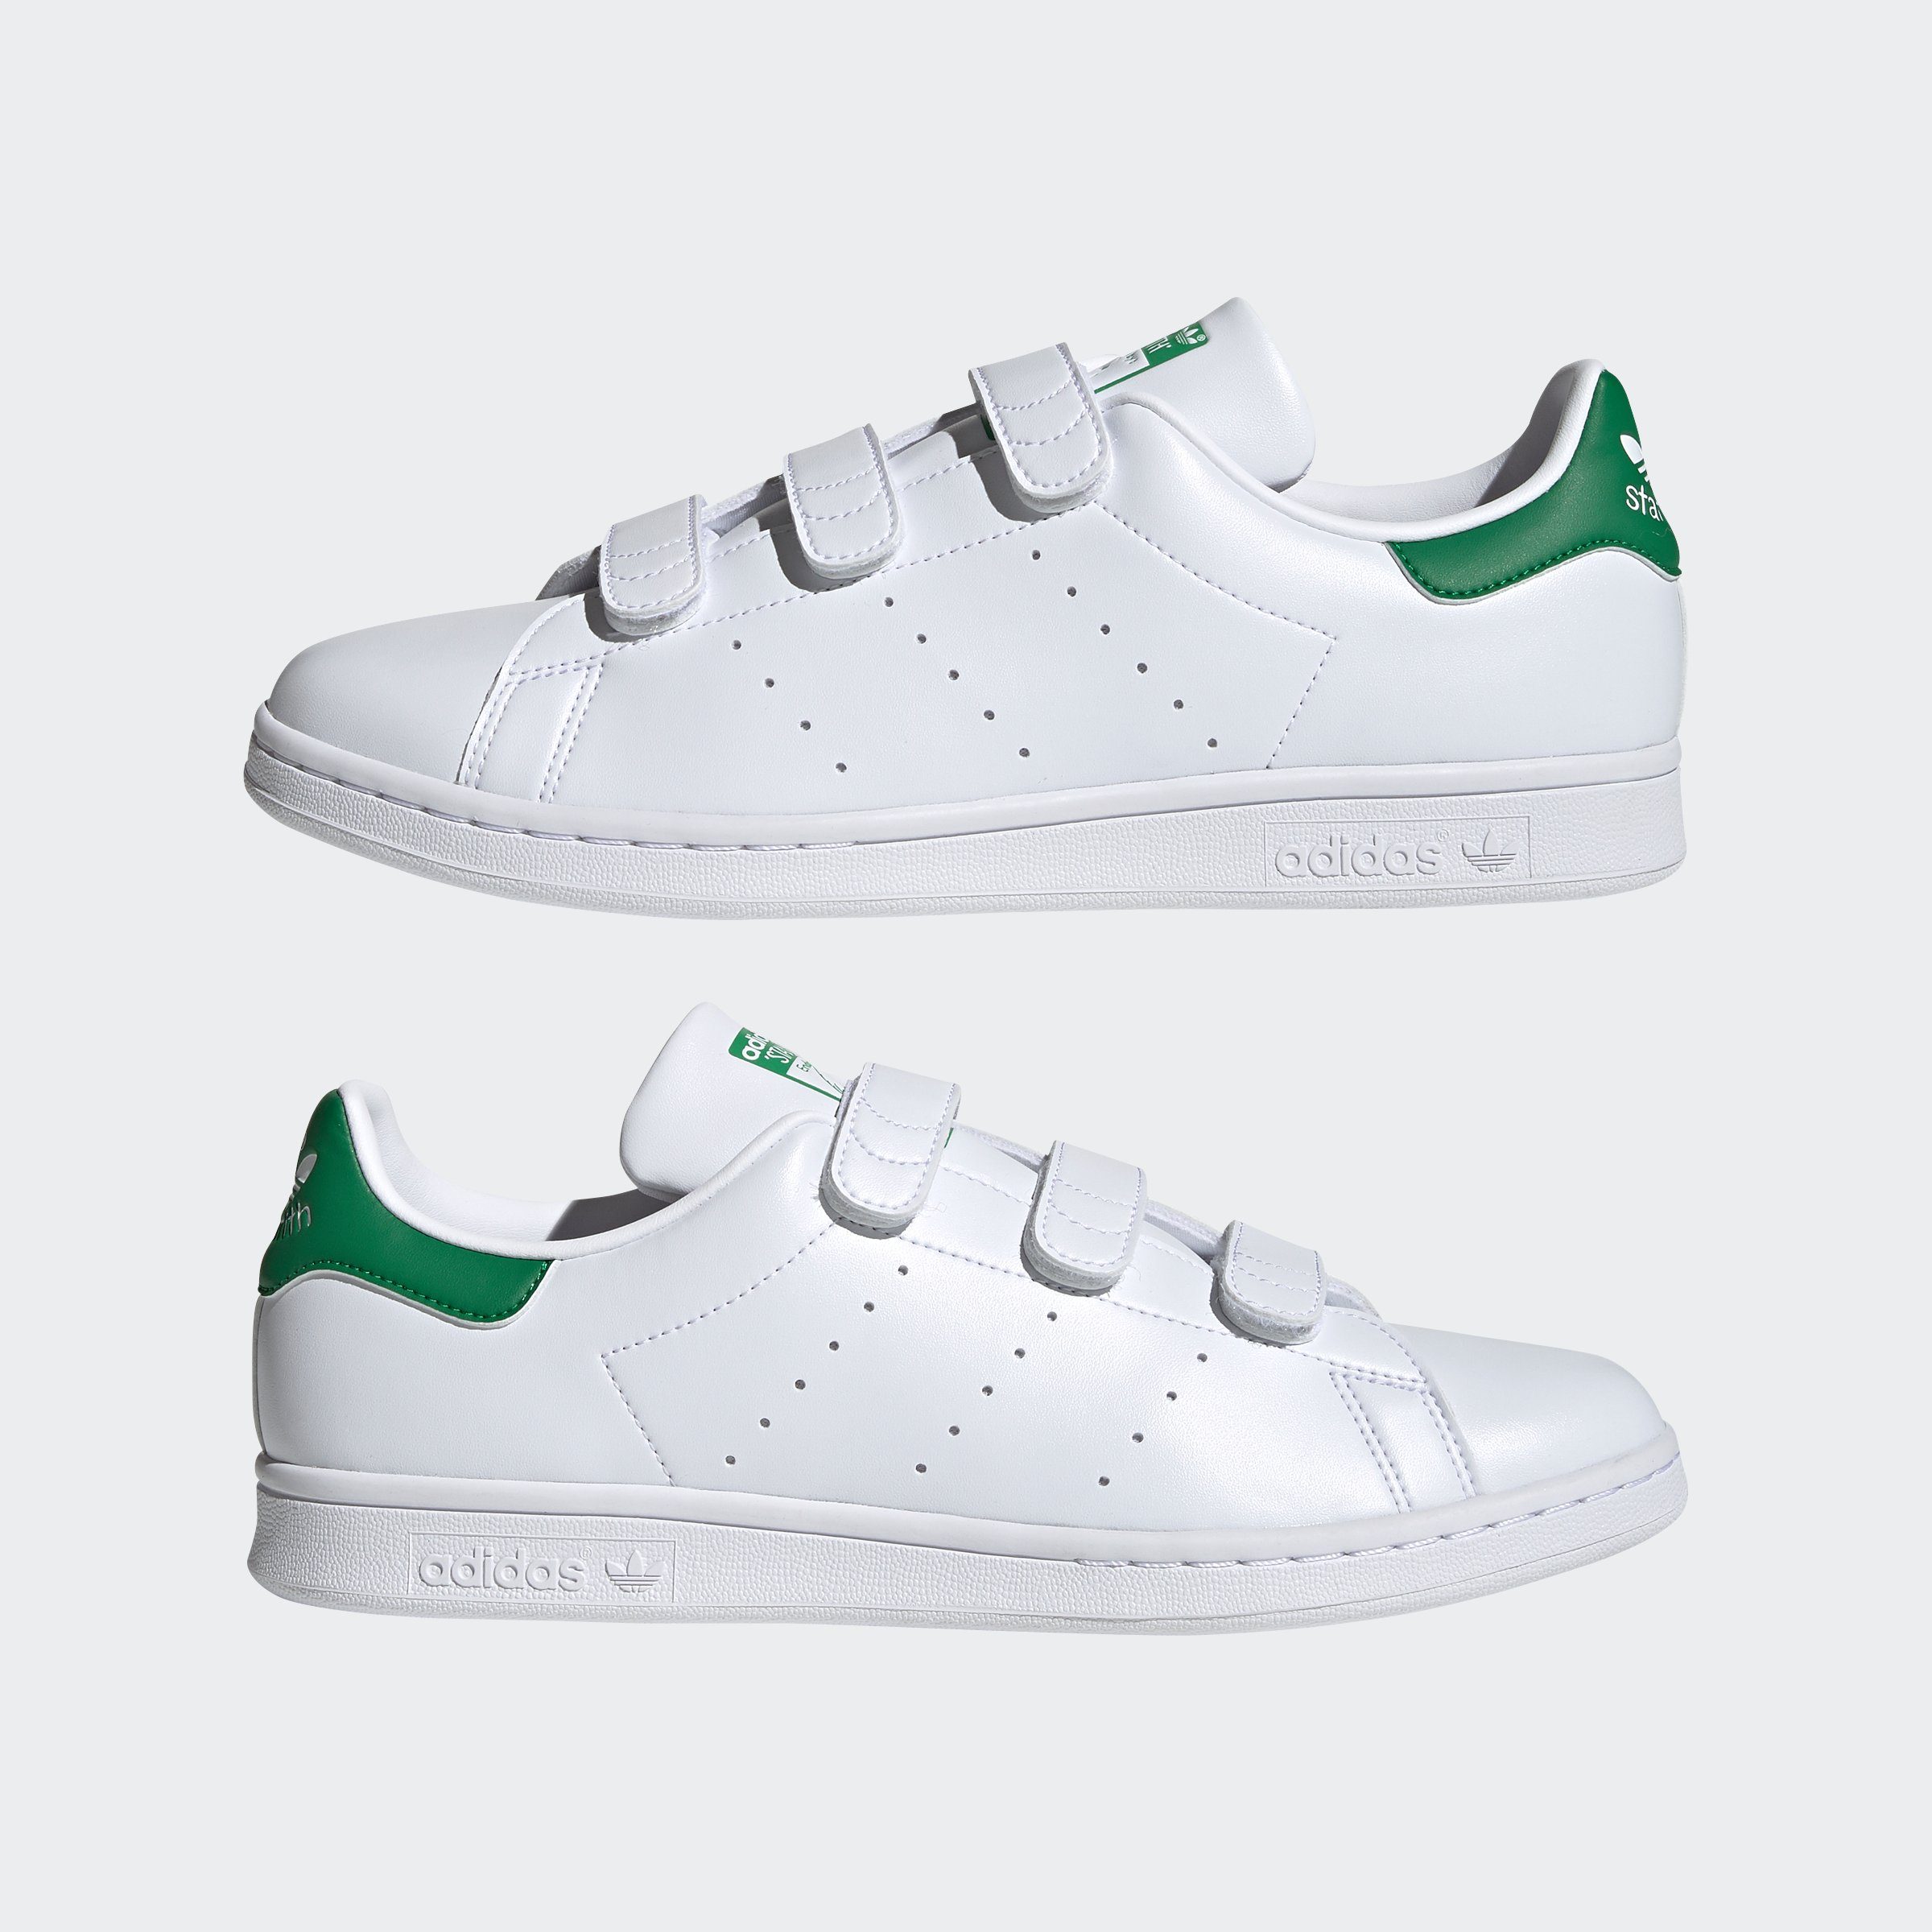 STAN / adidas SMITH Sneaker Green / Cloud Cloud White Originals White